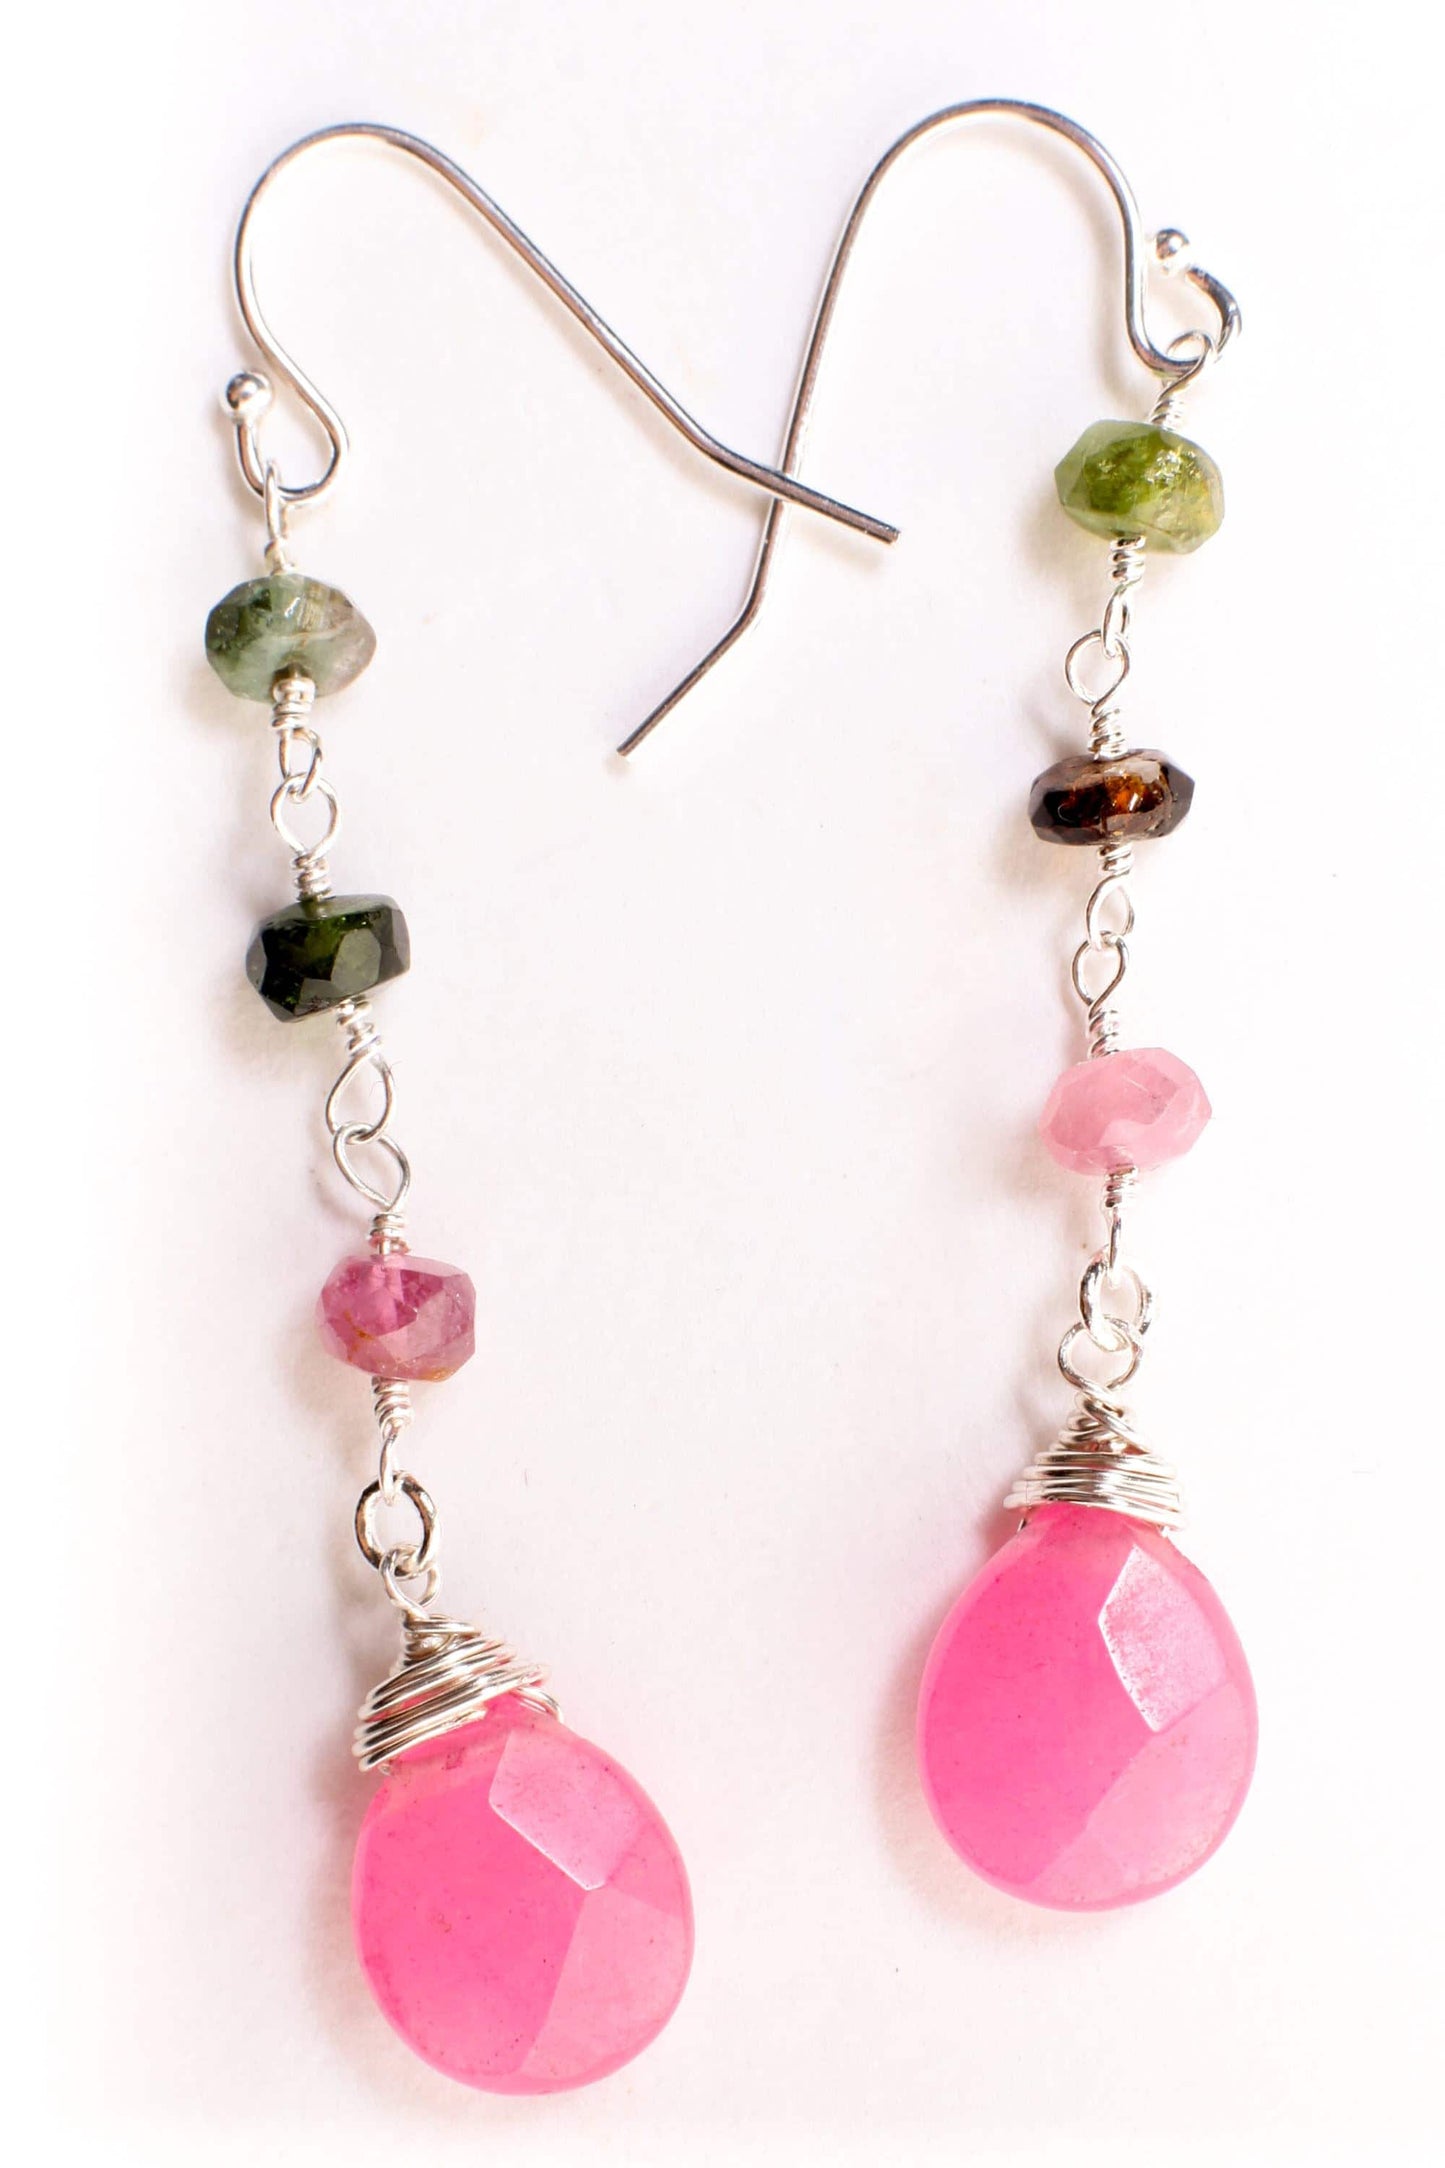 Watermelon Tourmaline Wire Wrapped Dangling Soft Pink Quartz Teardrop Earrings in 925 Sterling Silver Earwire, Handmade Gift for Her